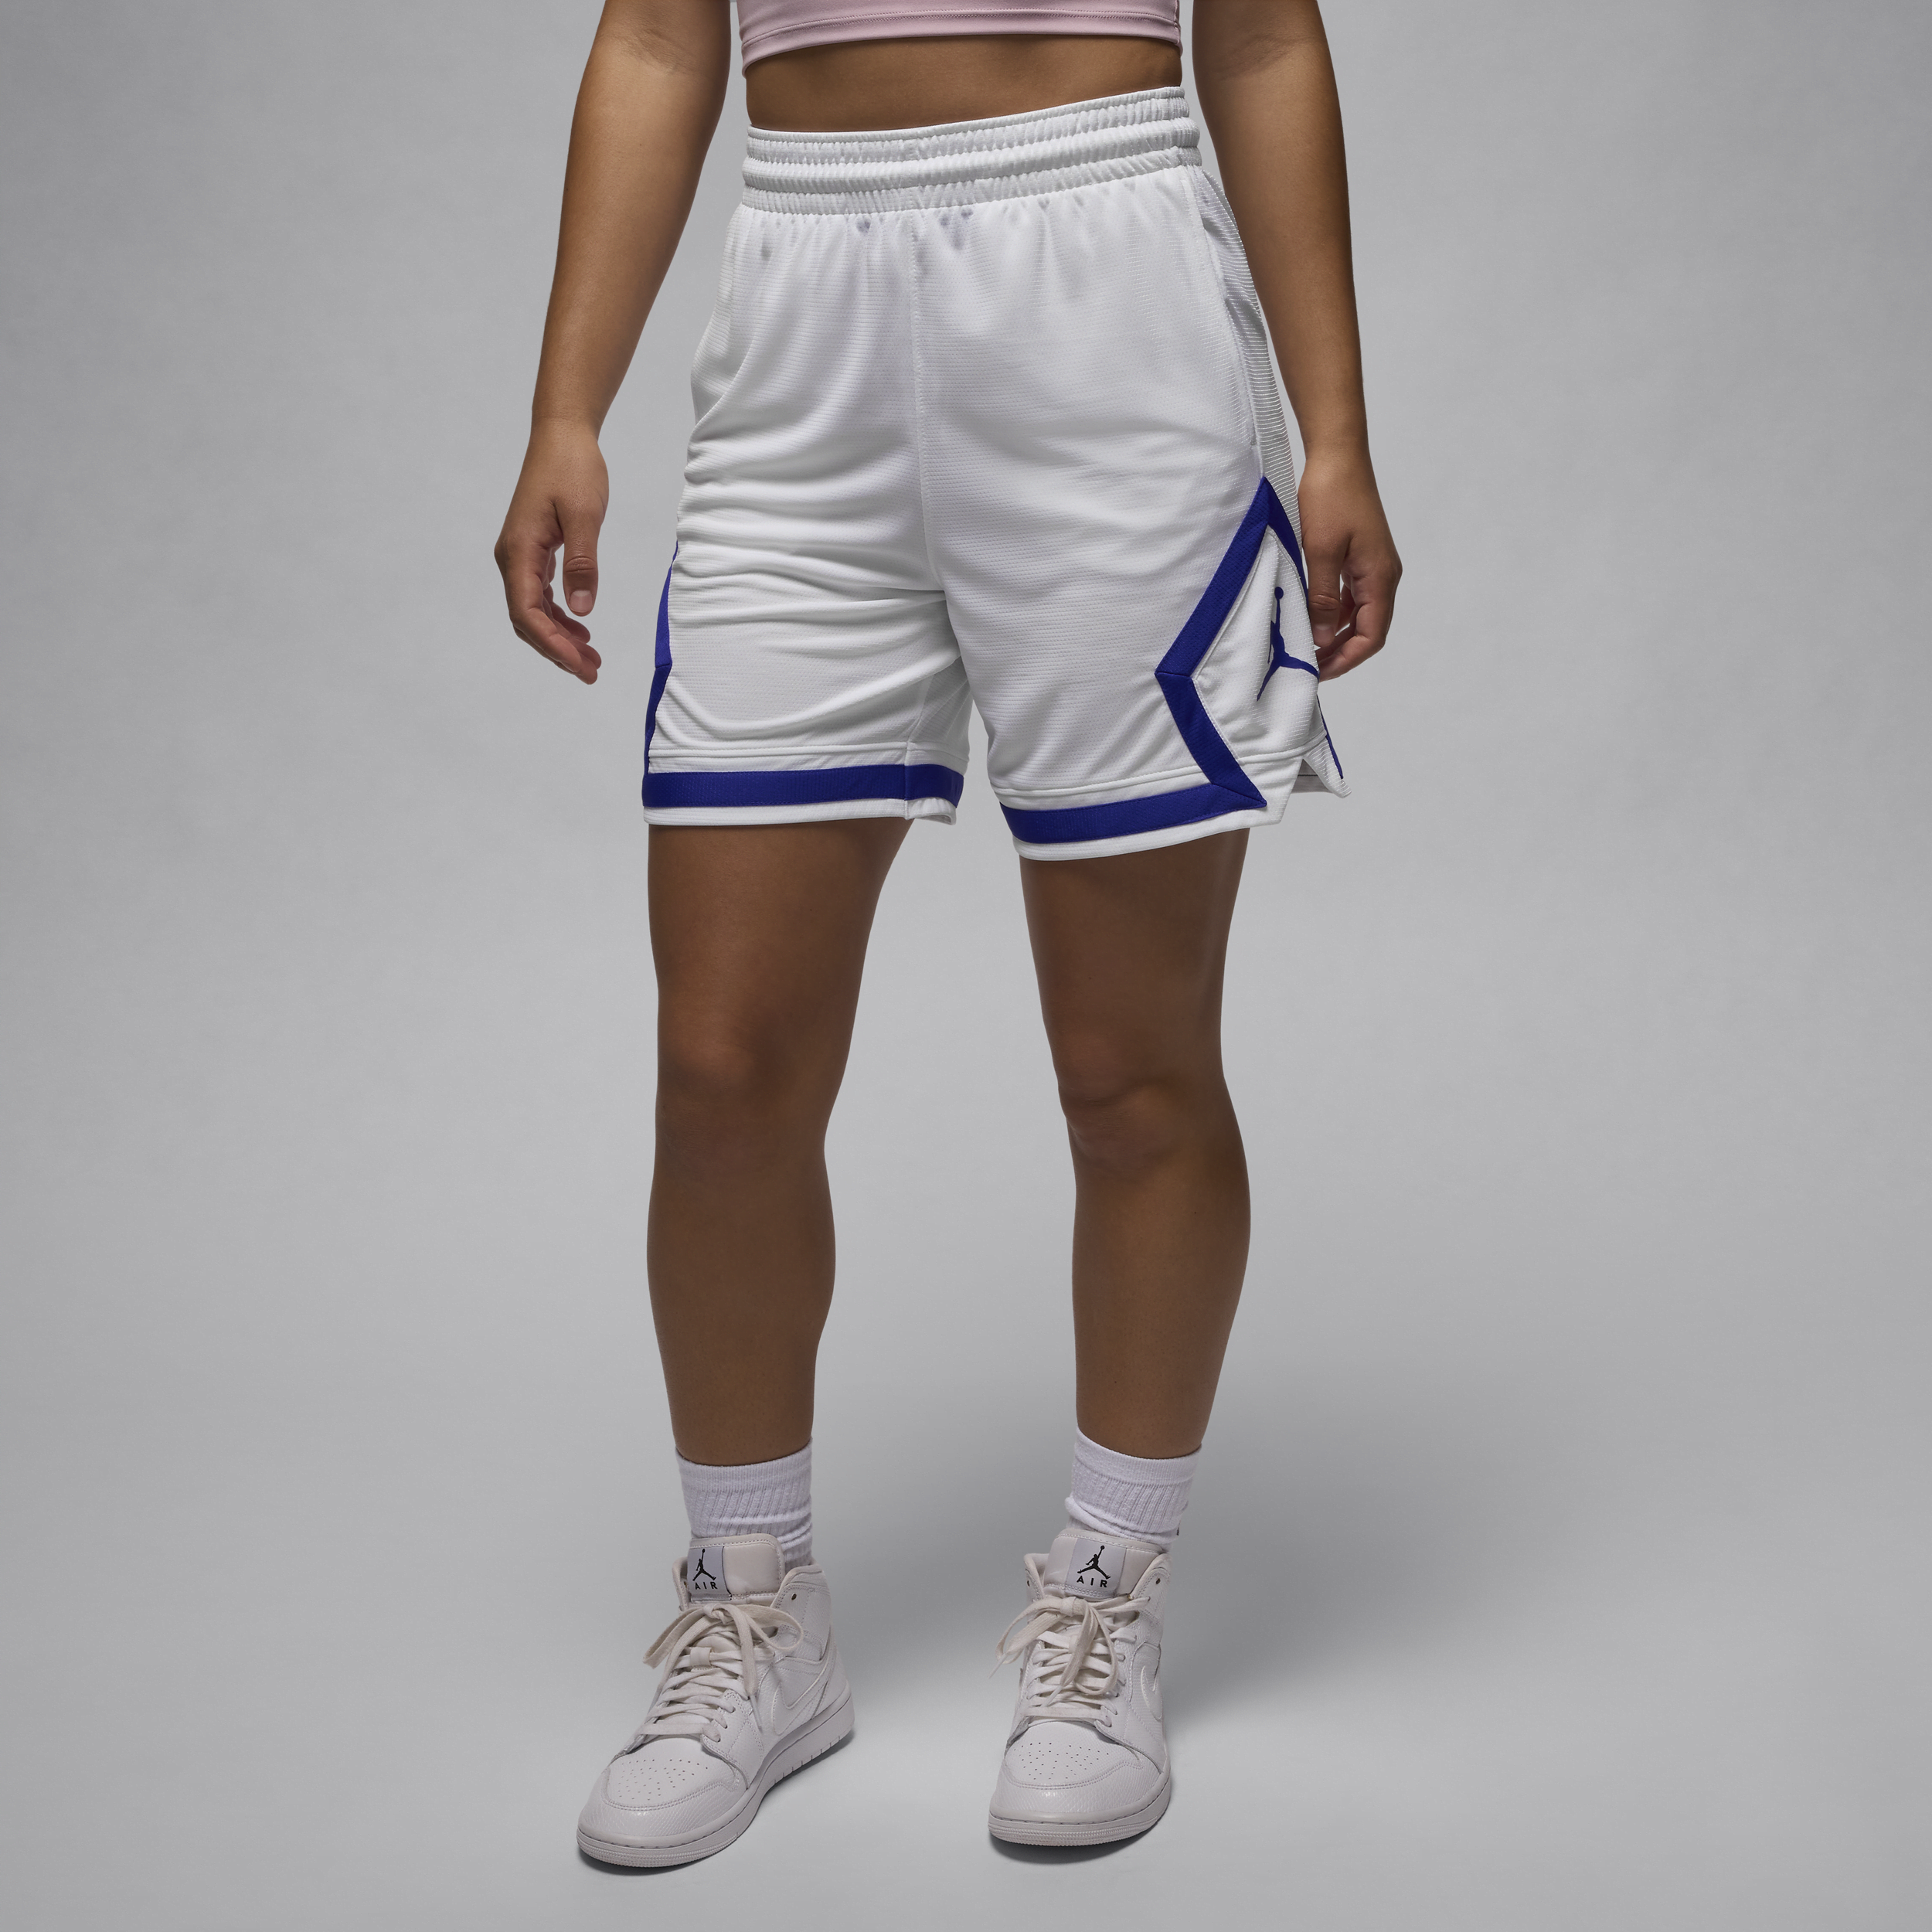 Jordan Sport Diamond-shorts til kvinder - hvid